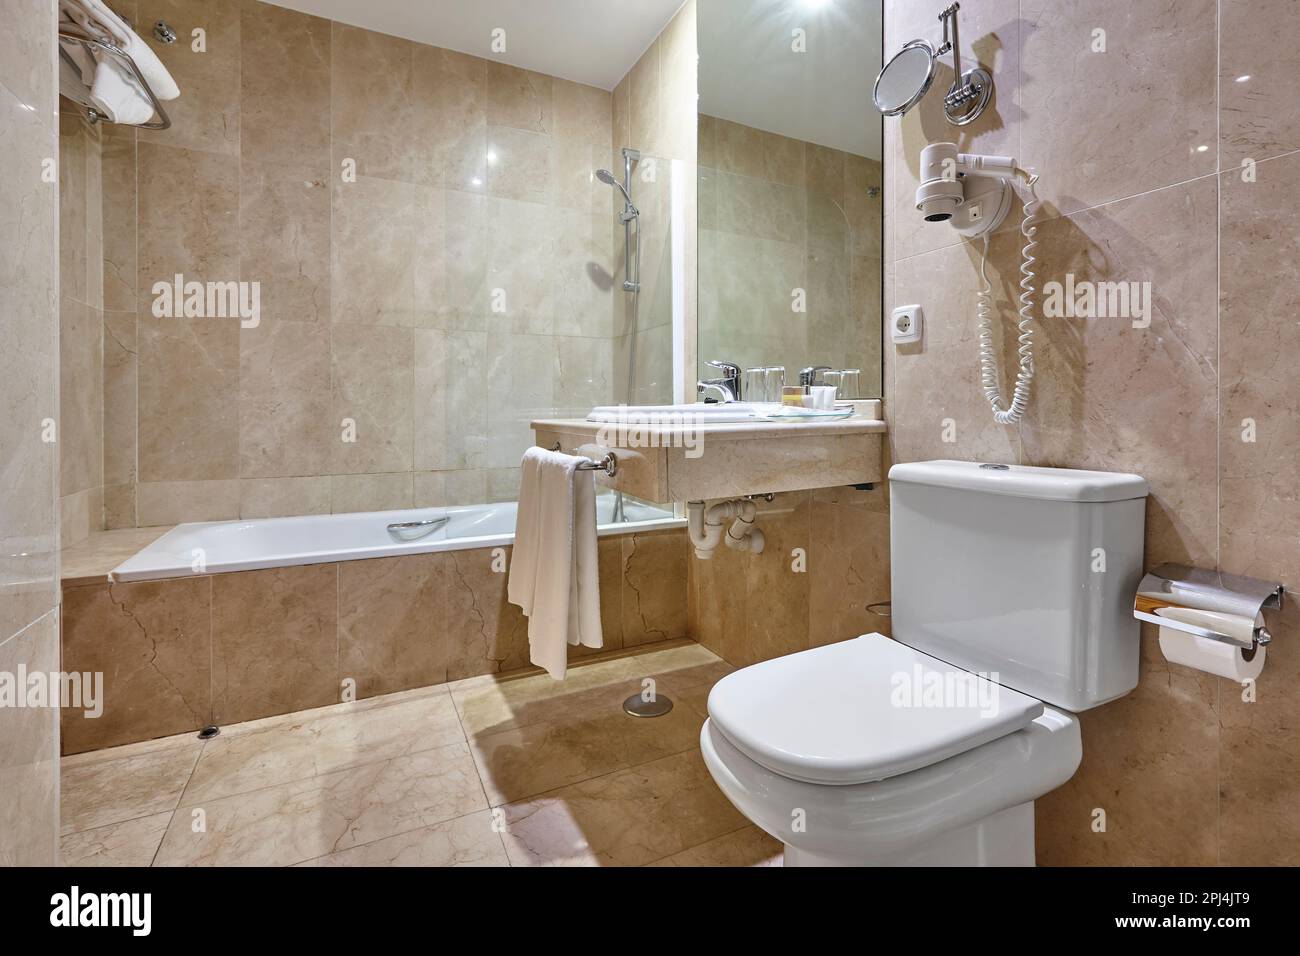 Hospital bathroom finished in marble. Shower, lavatory, wash hand basin Stock Photo